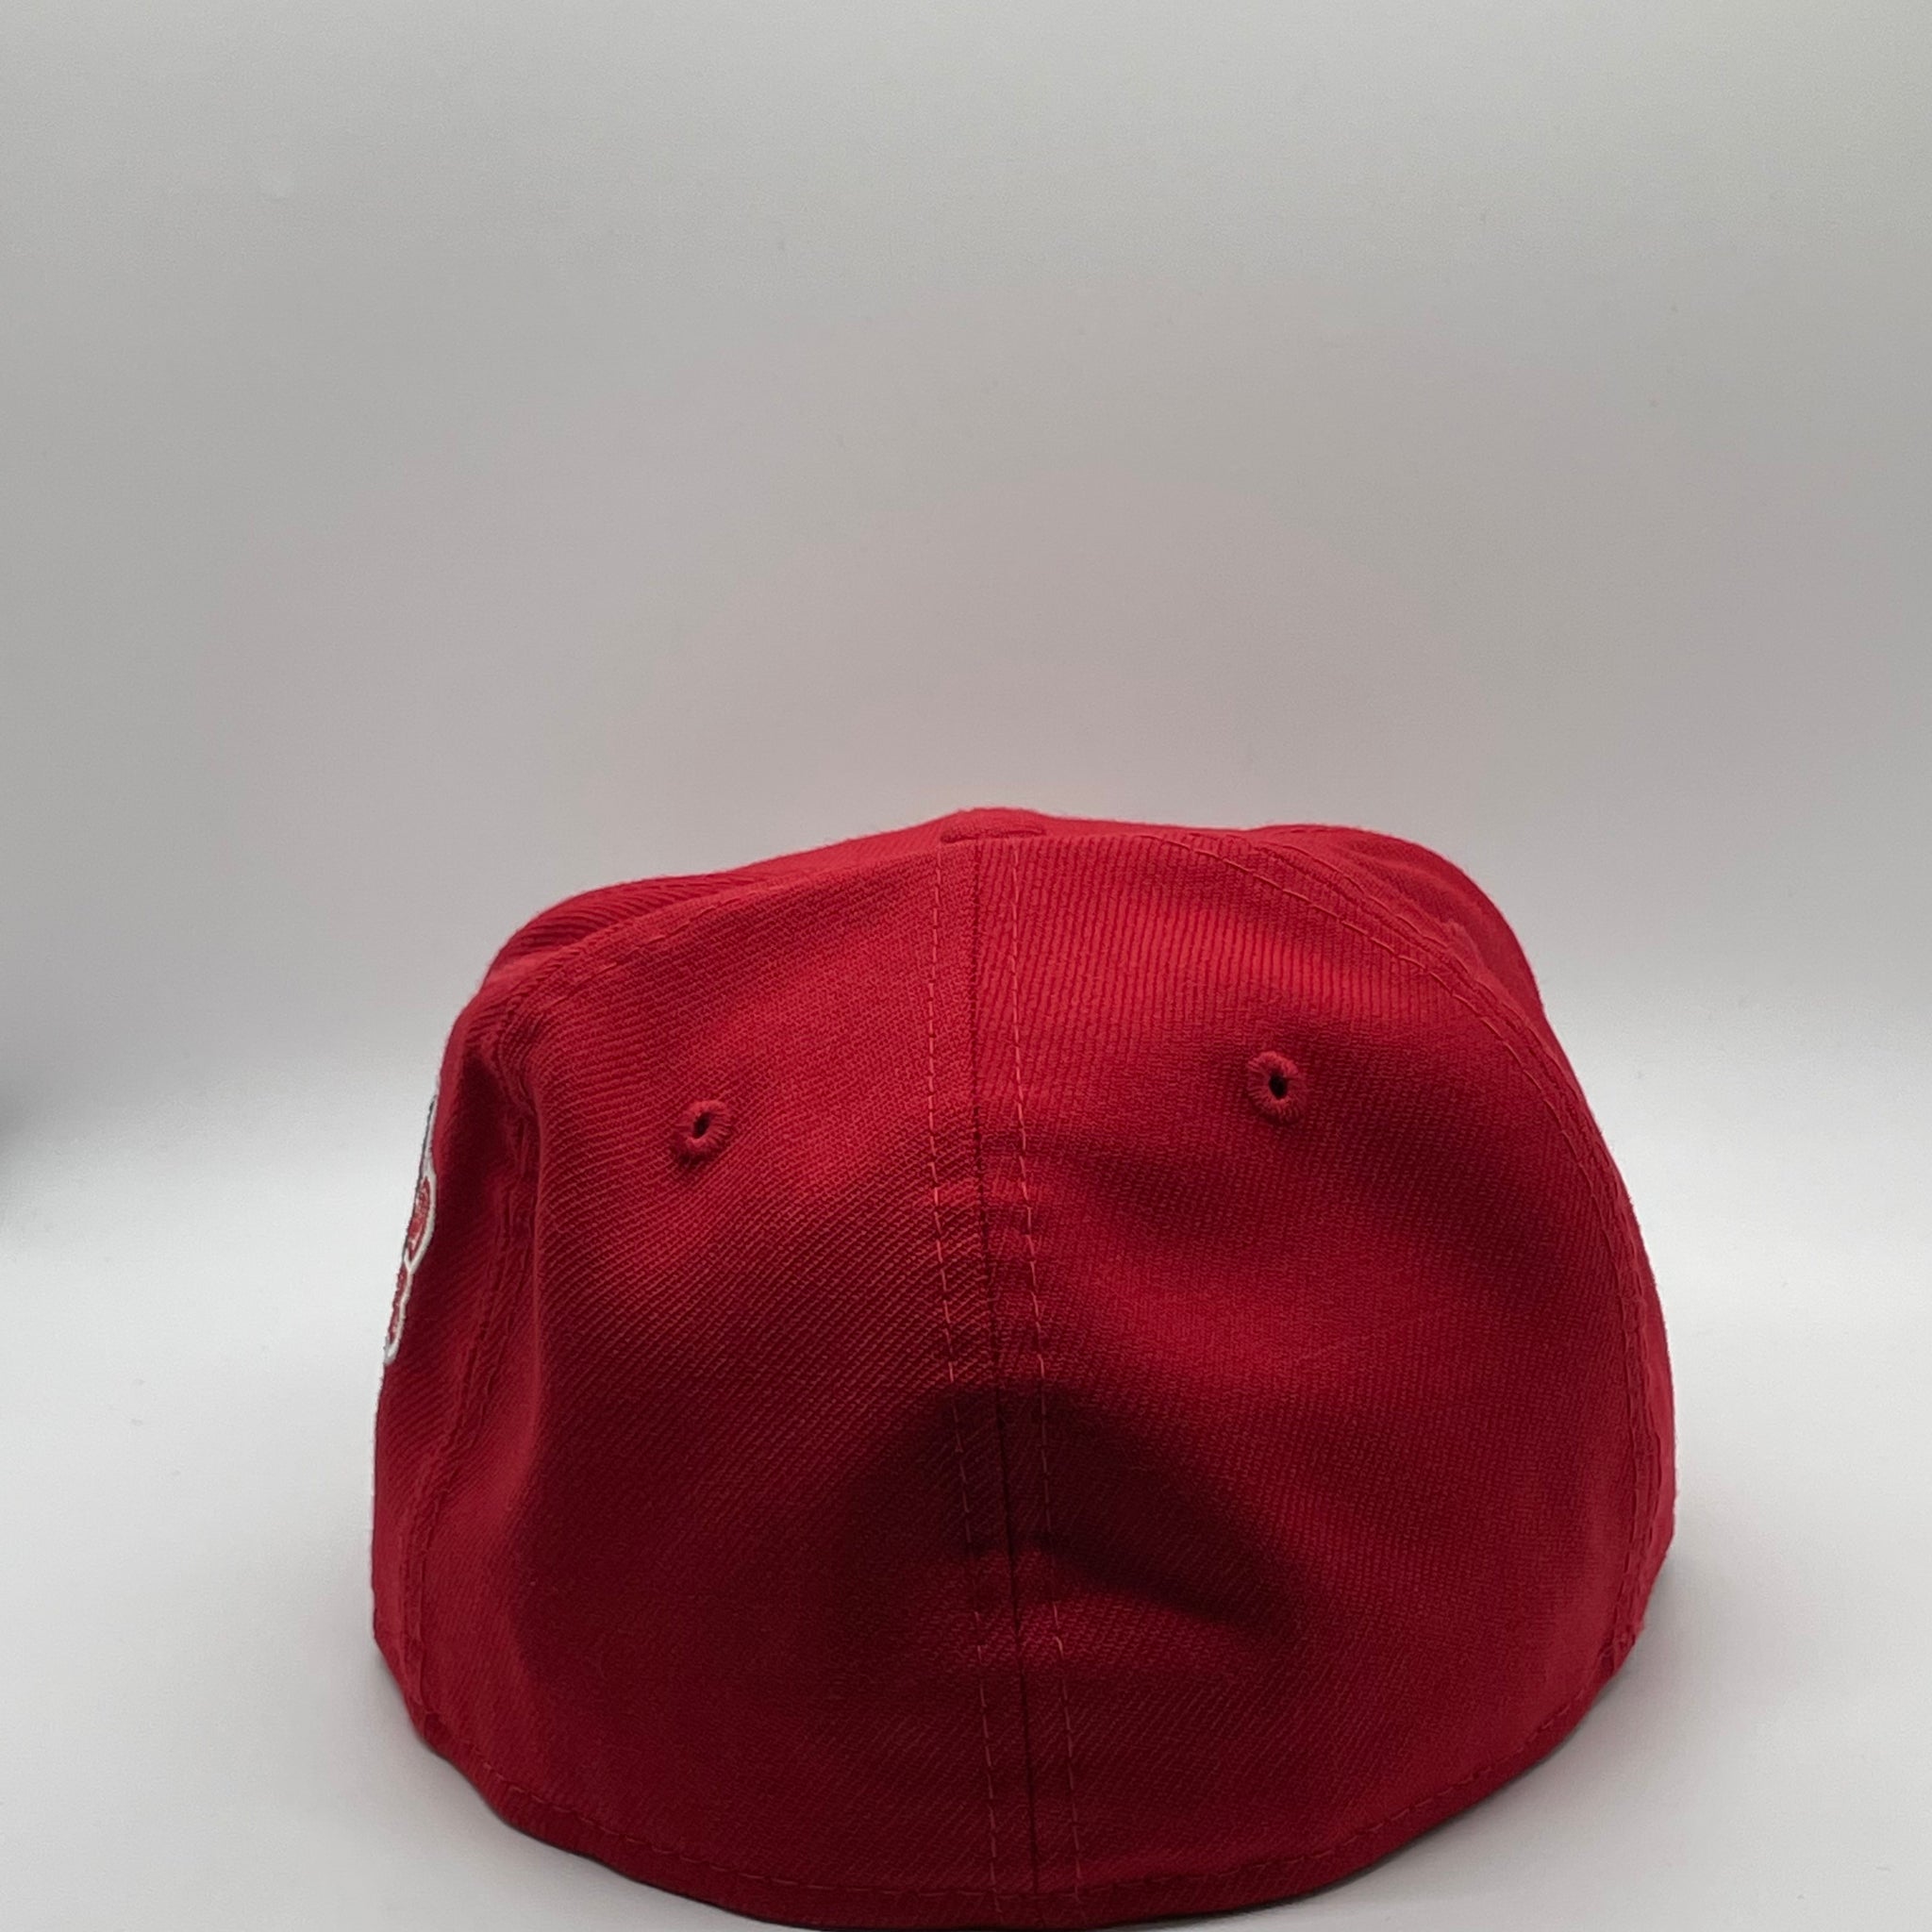 CINCINNATI REDS 1953 ALL STAR GAME RED BRIM NEW ERA FITTED HAT – Sports  World 165